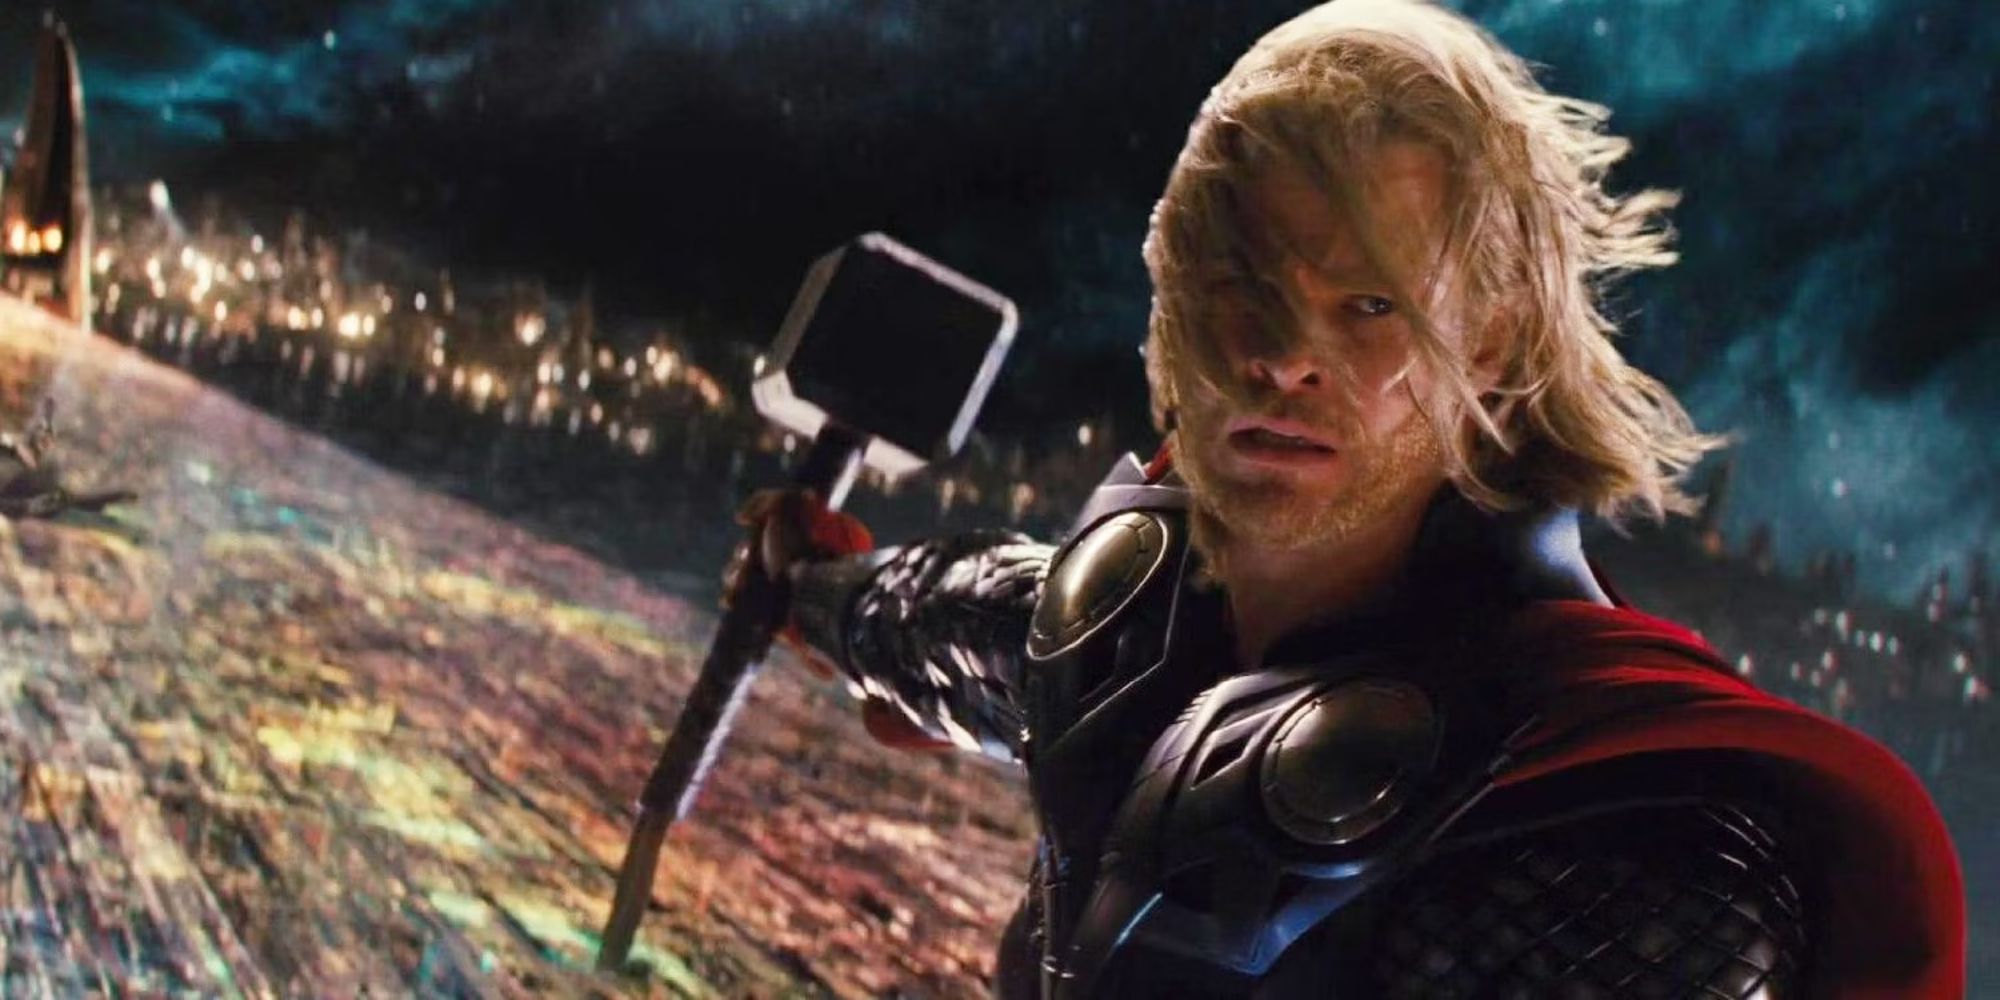 Chris Hemsworth as Thor in Thor 2011